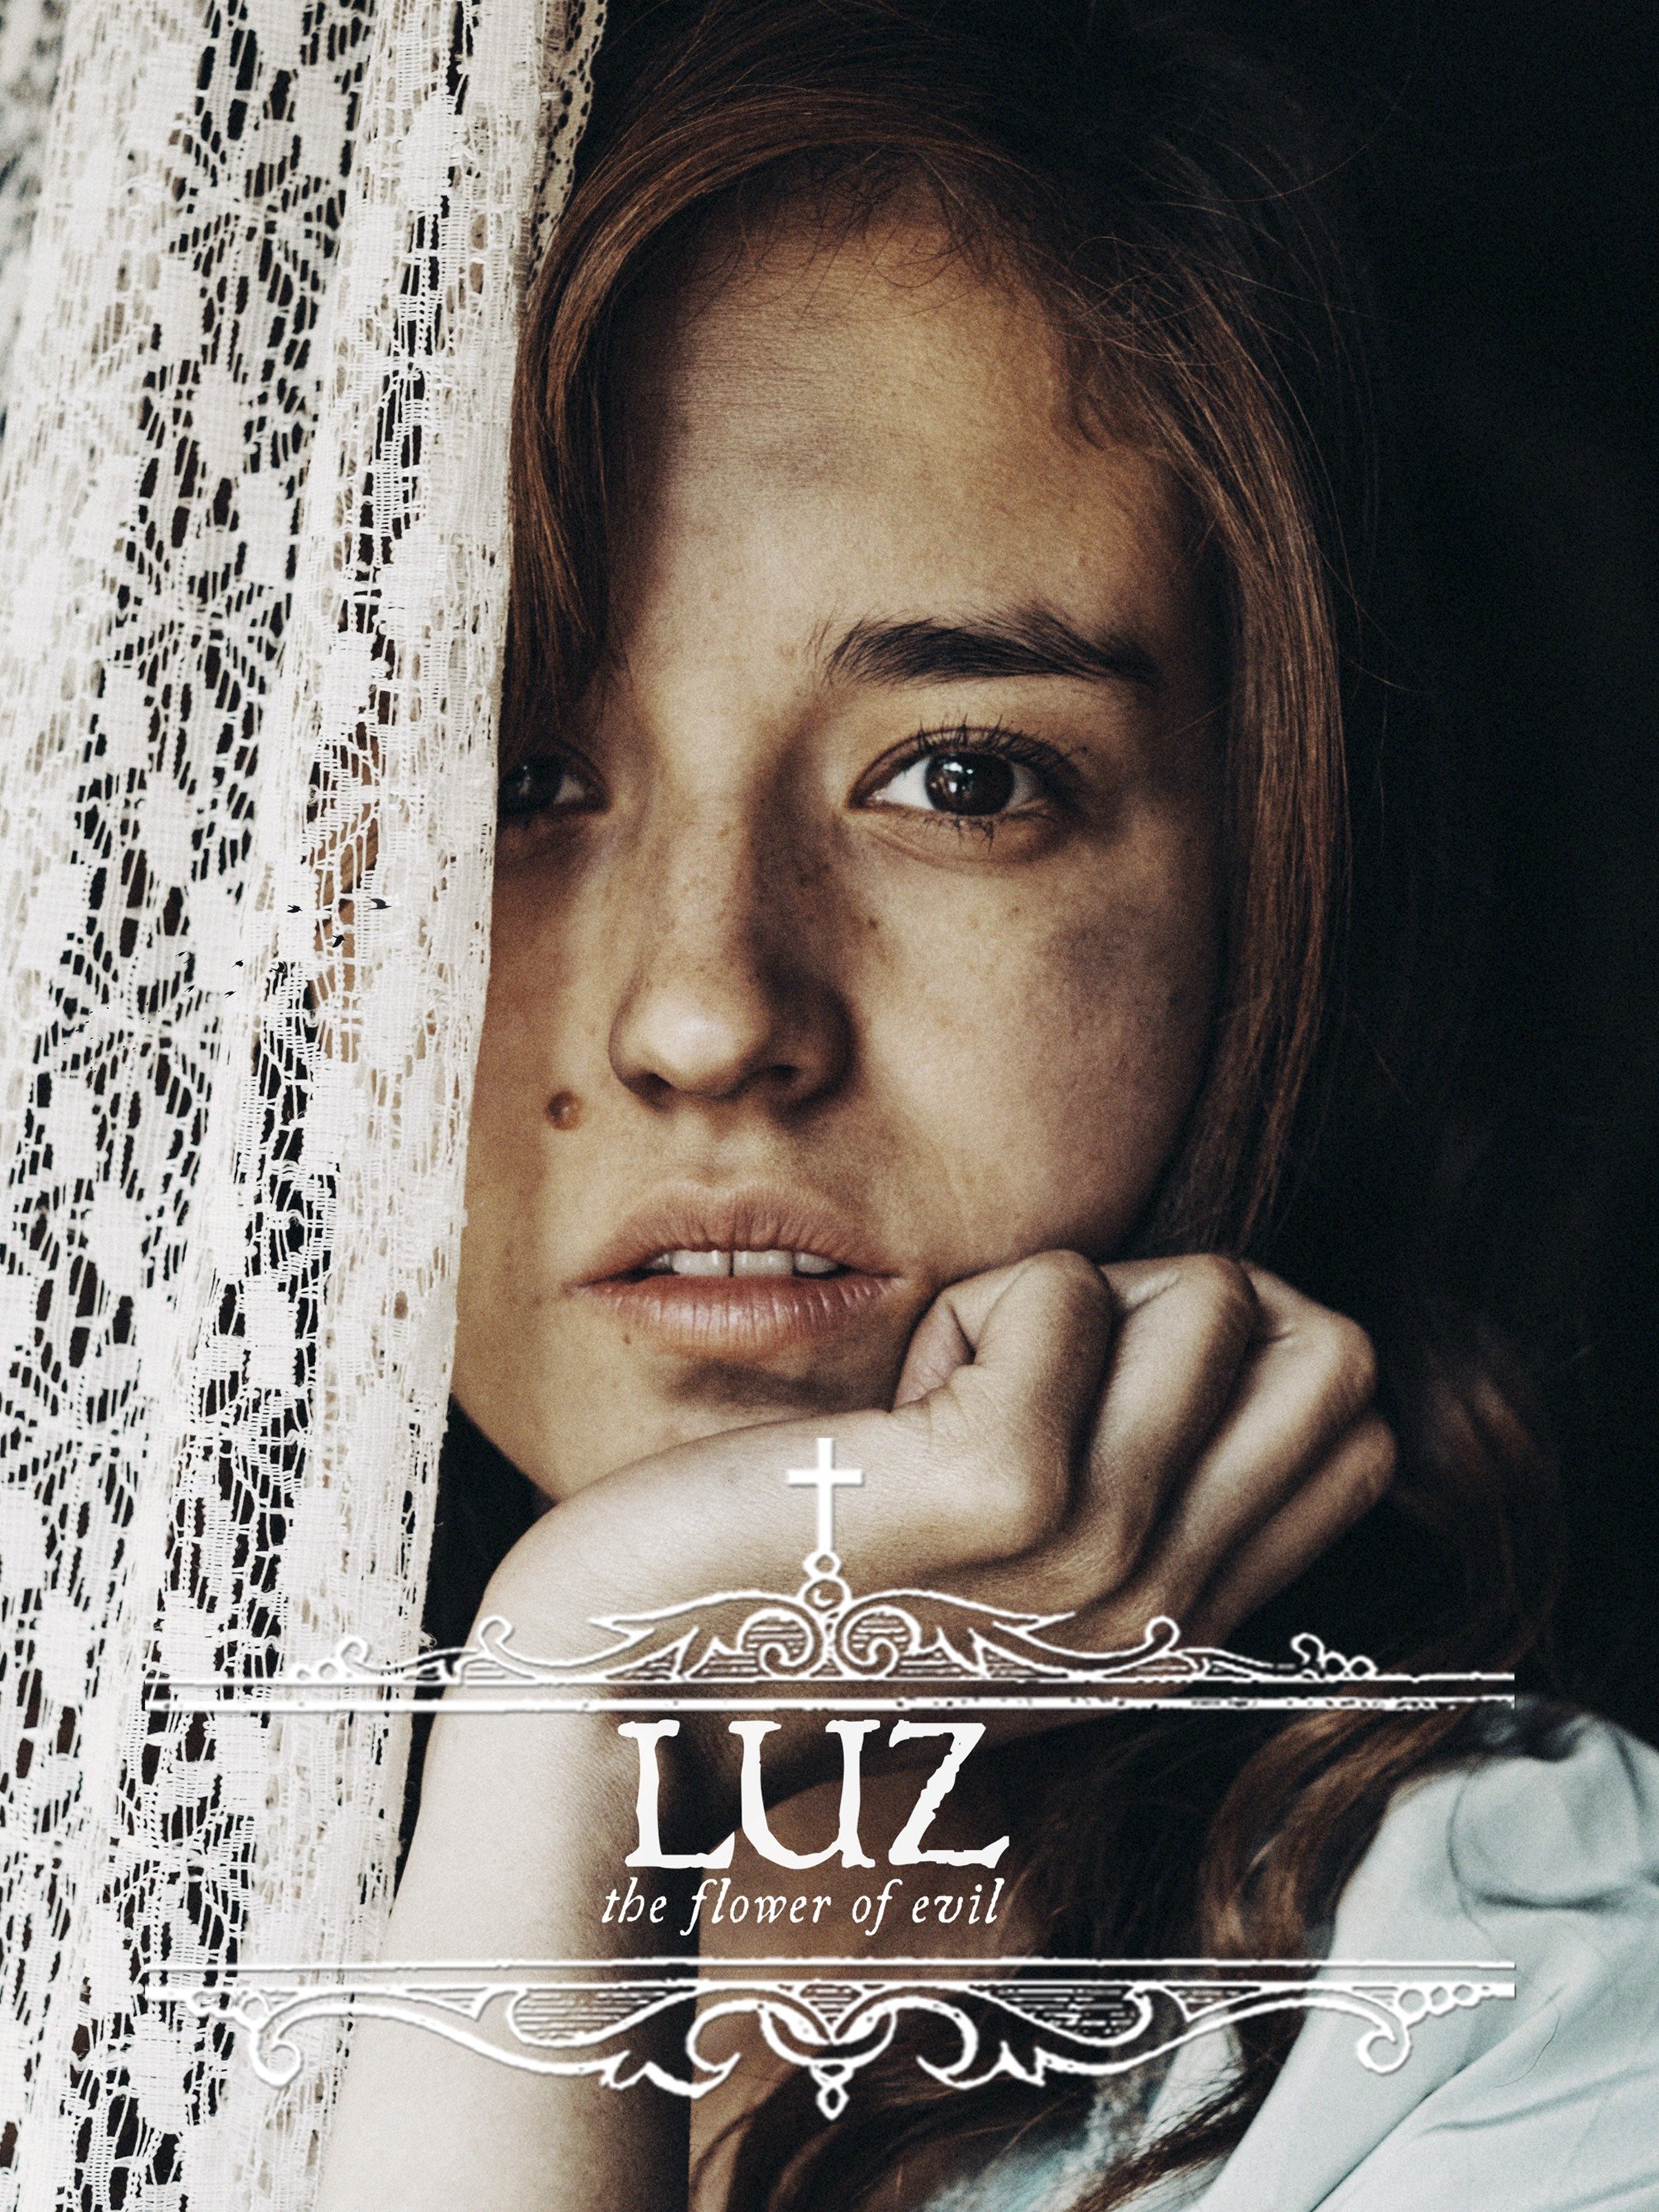 "Luz: The Flower of Evil photo 7"